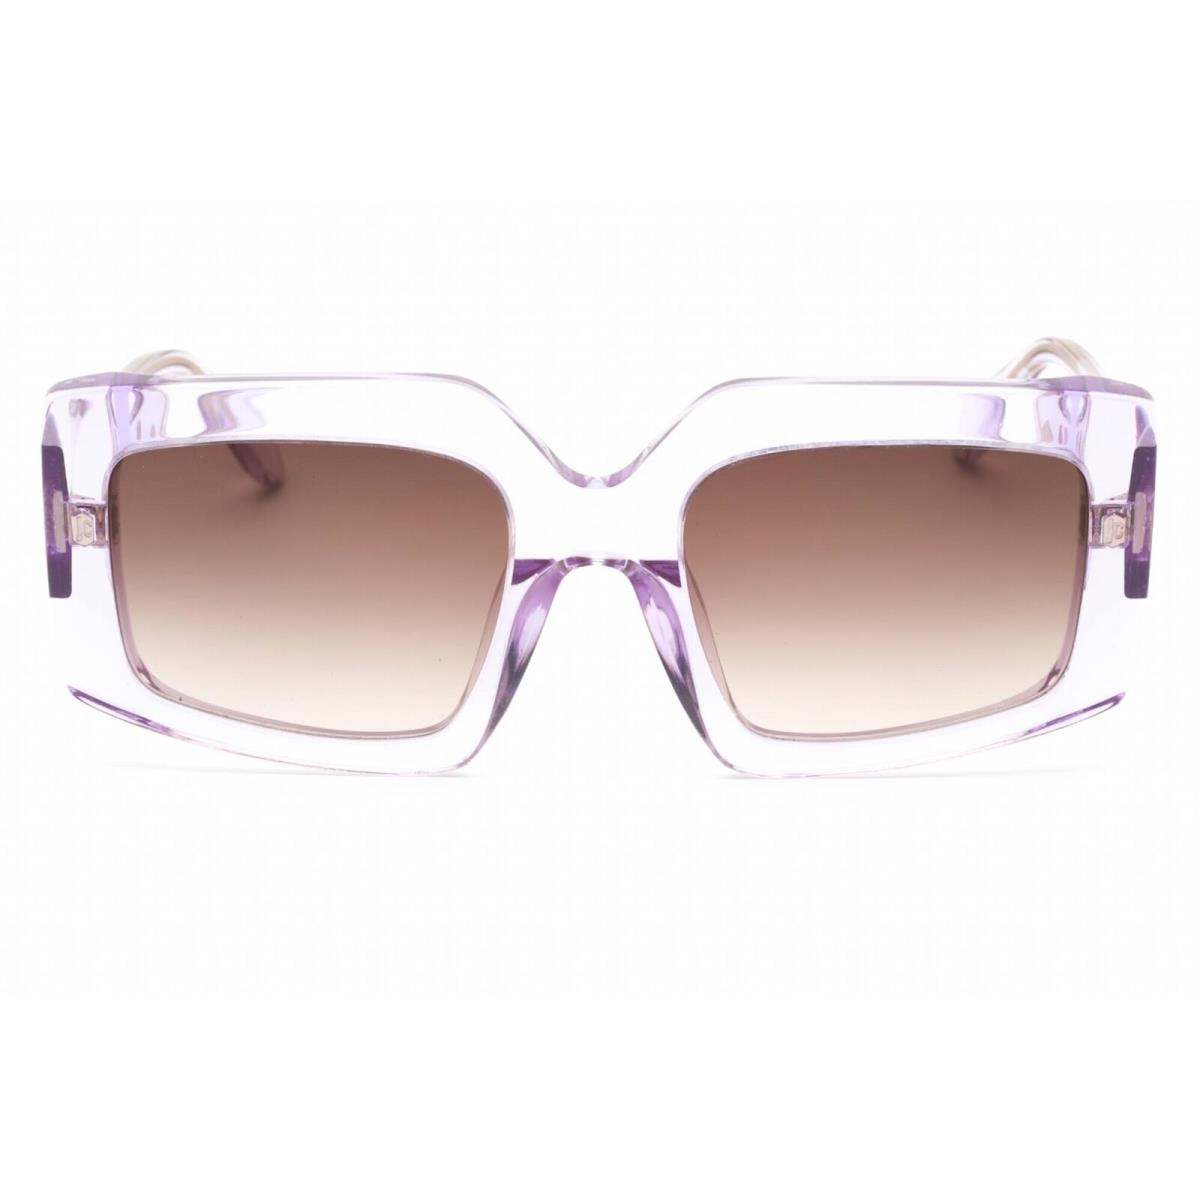 Just Cavalli Women`s Sunglasses Transparent Violet Plastic Frame SJC020V 06SC